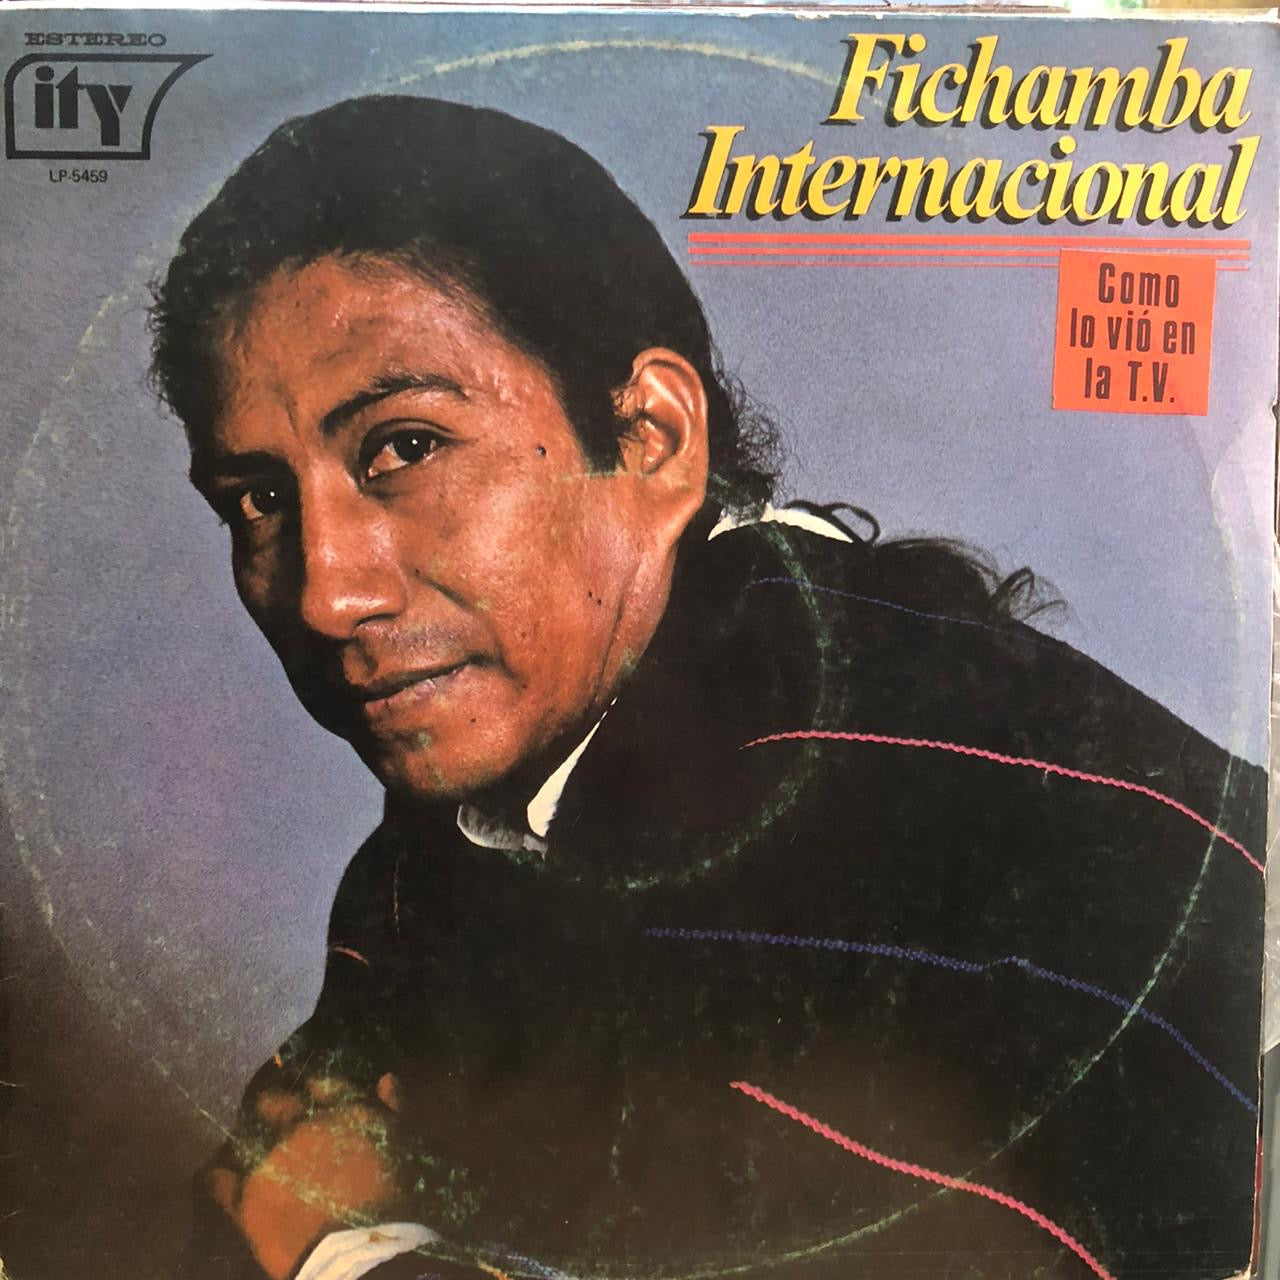 FICHAMBA - INTERNACIONAL LP